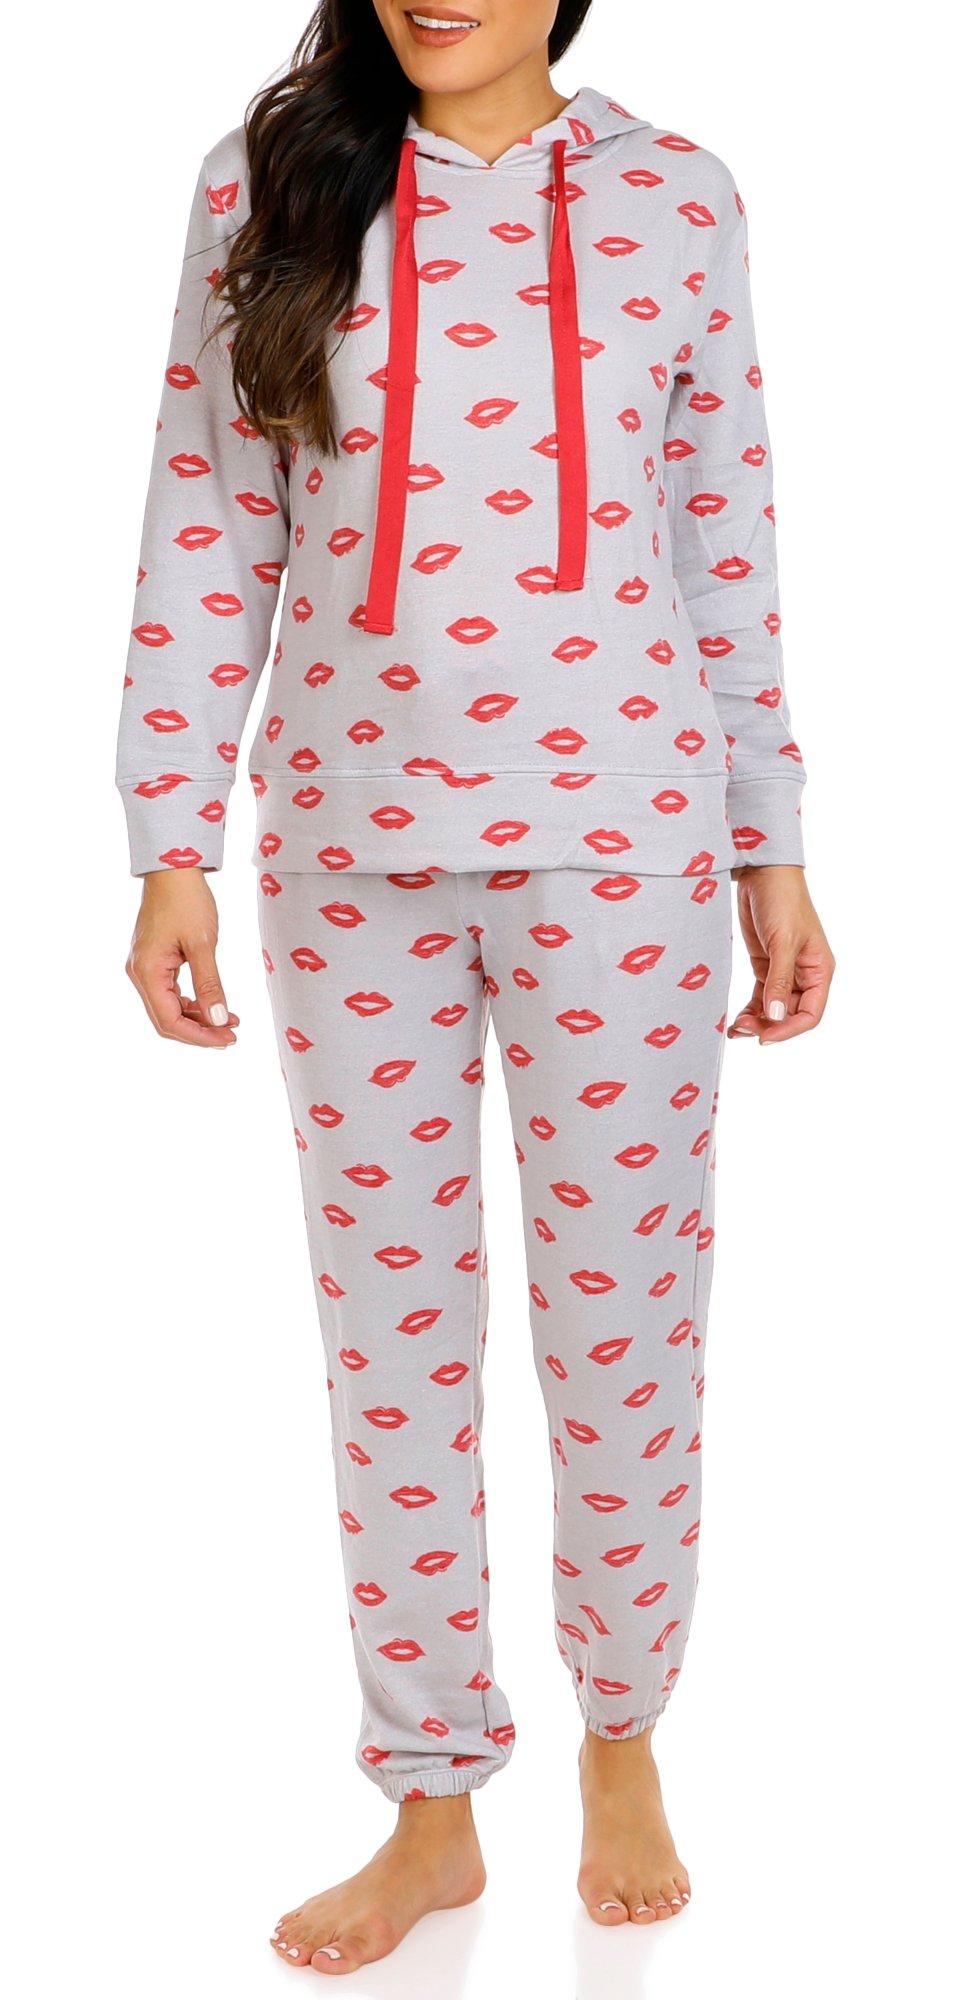 Women's 2 Pc Lips Print Pajama Pants Set